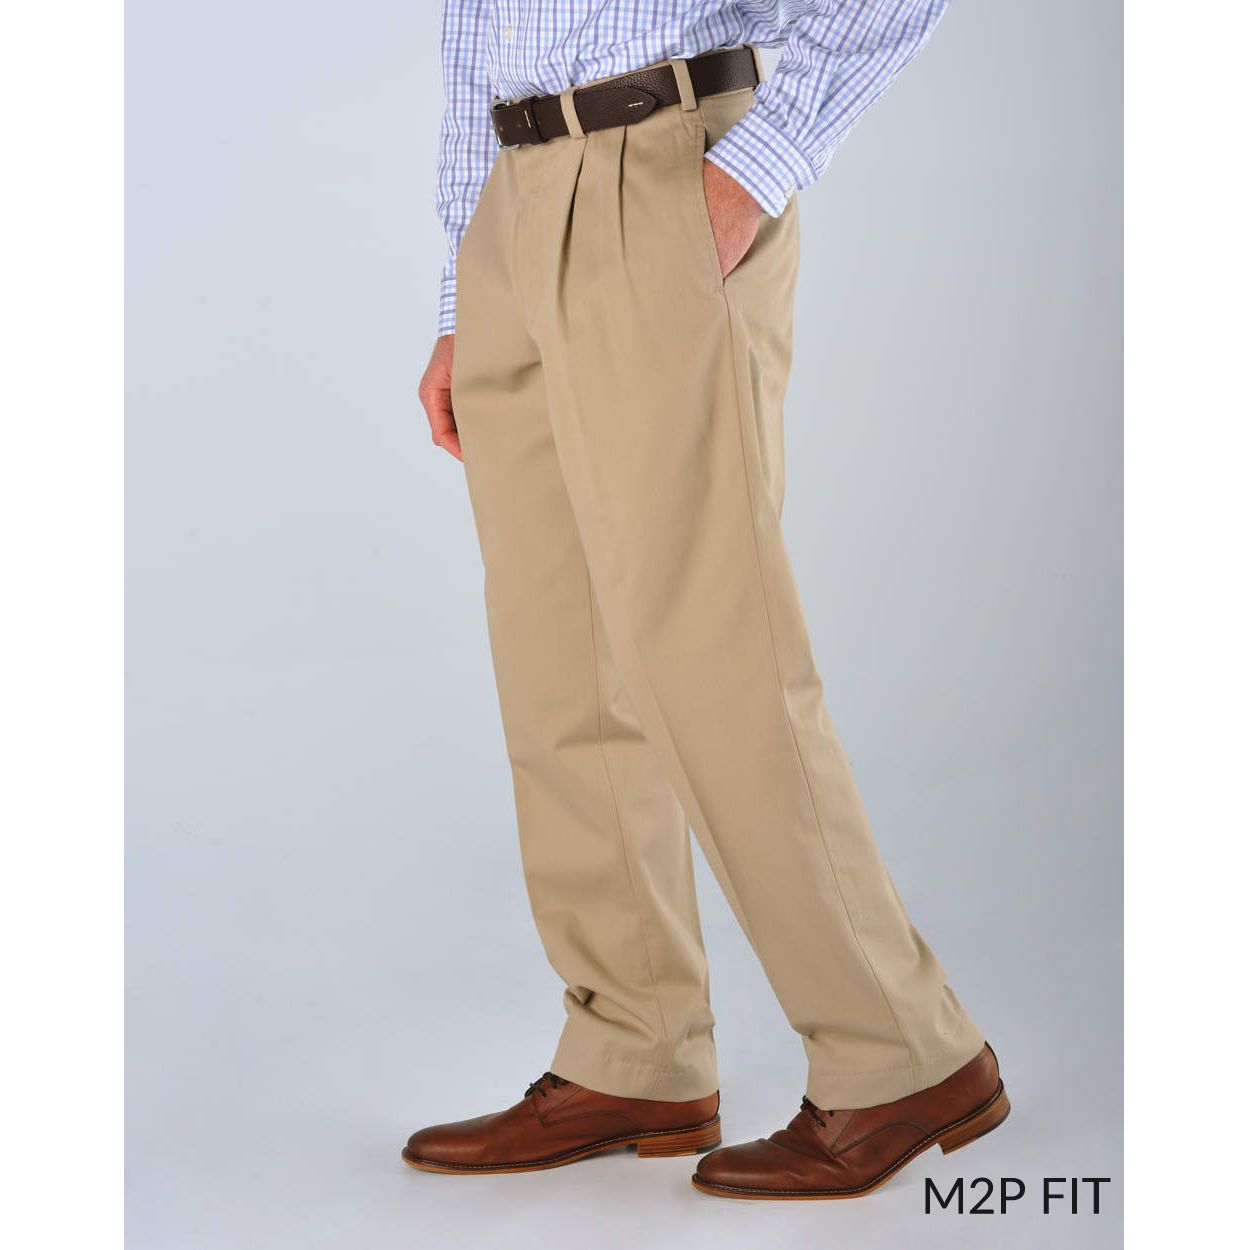 M2P Pleated Classic Fit Vintage Twills in Khaki (Size 40 x 28 1/2) by Bills Khakis